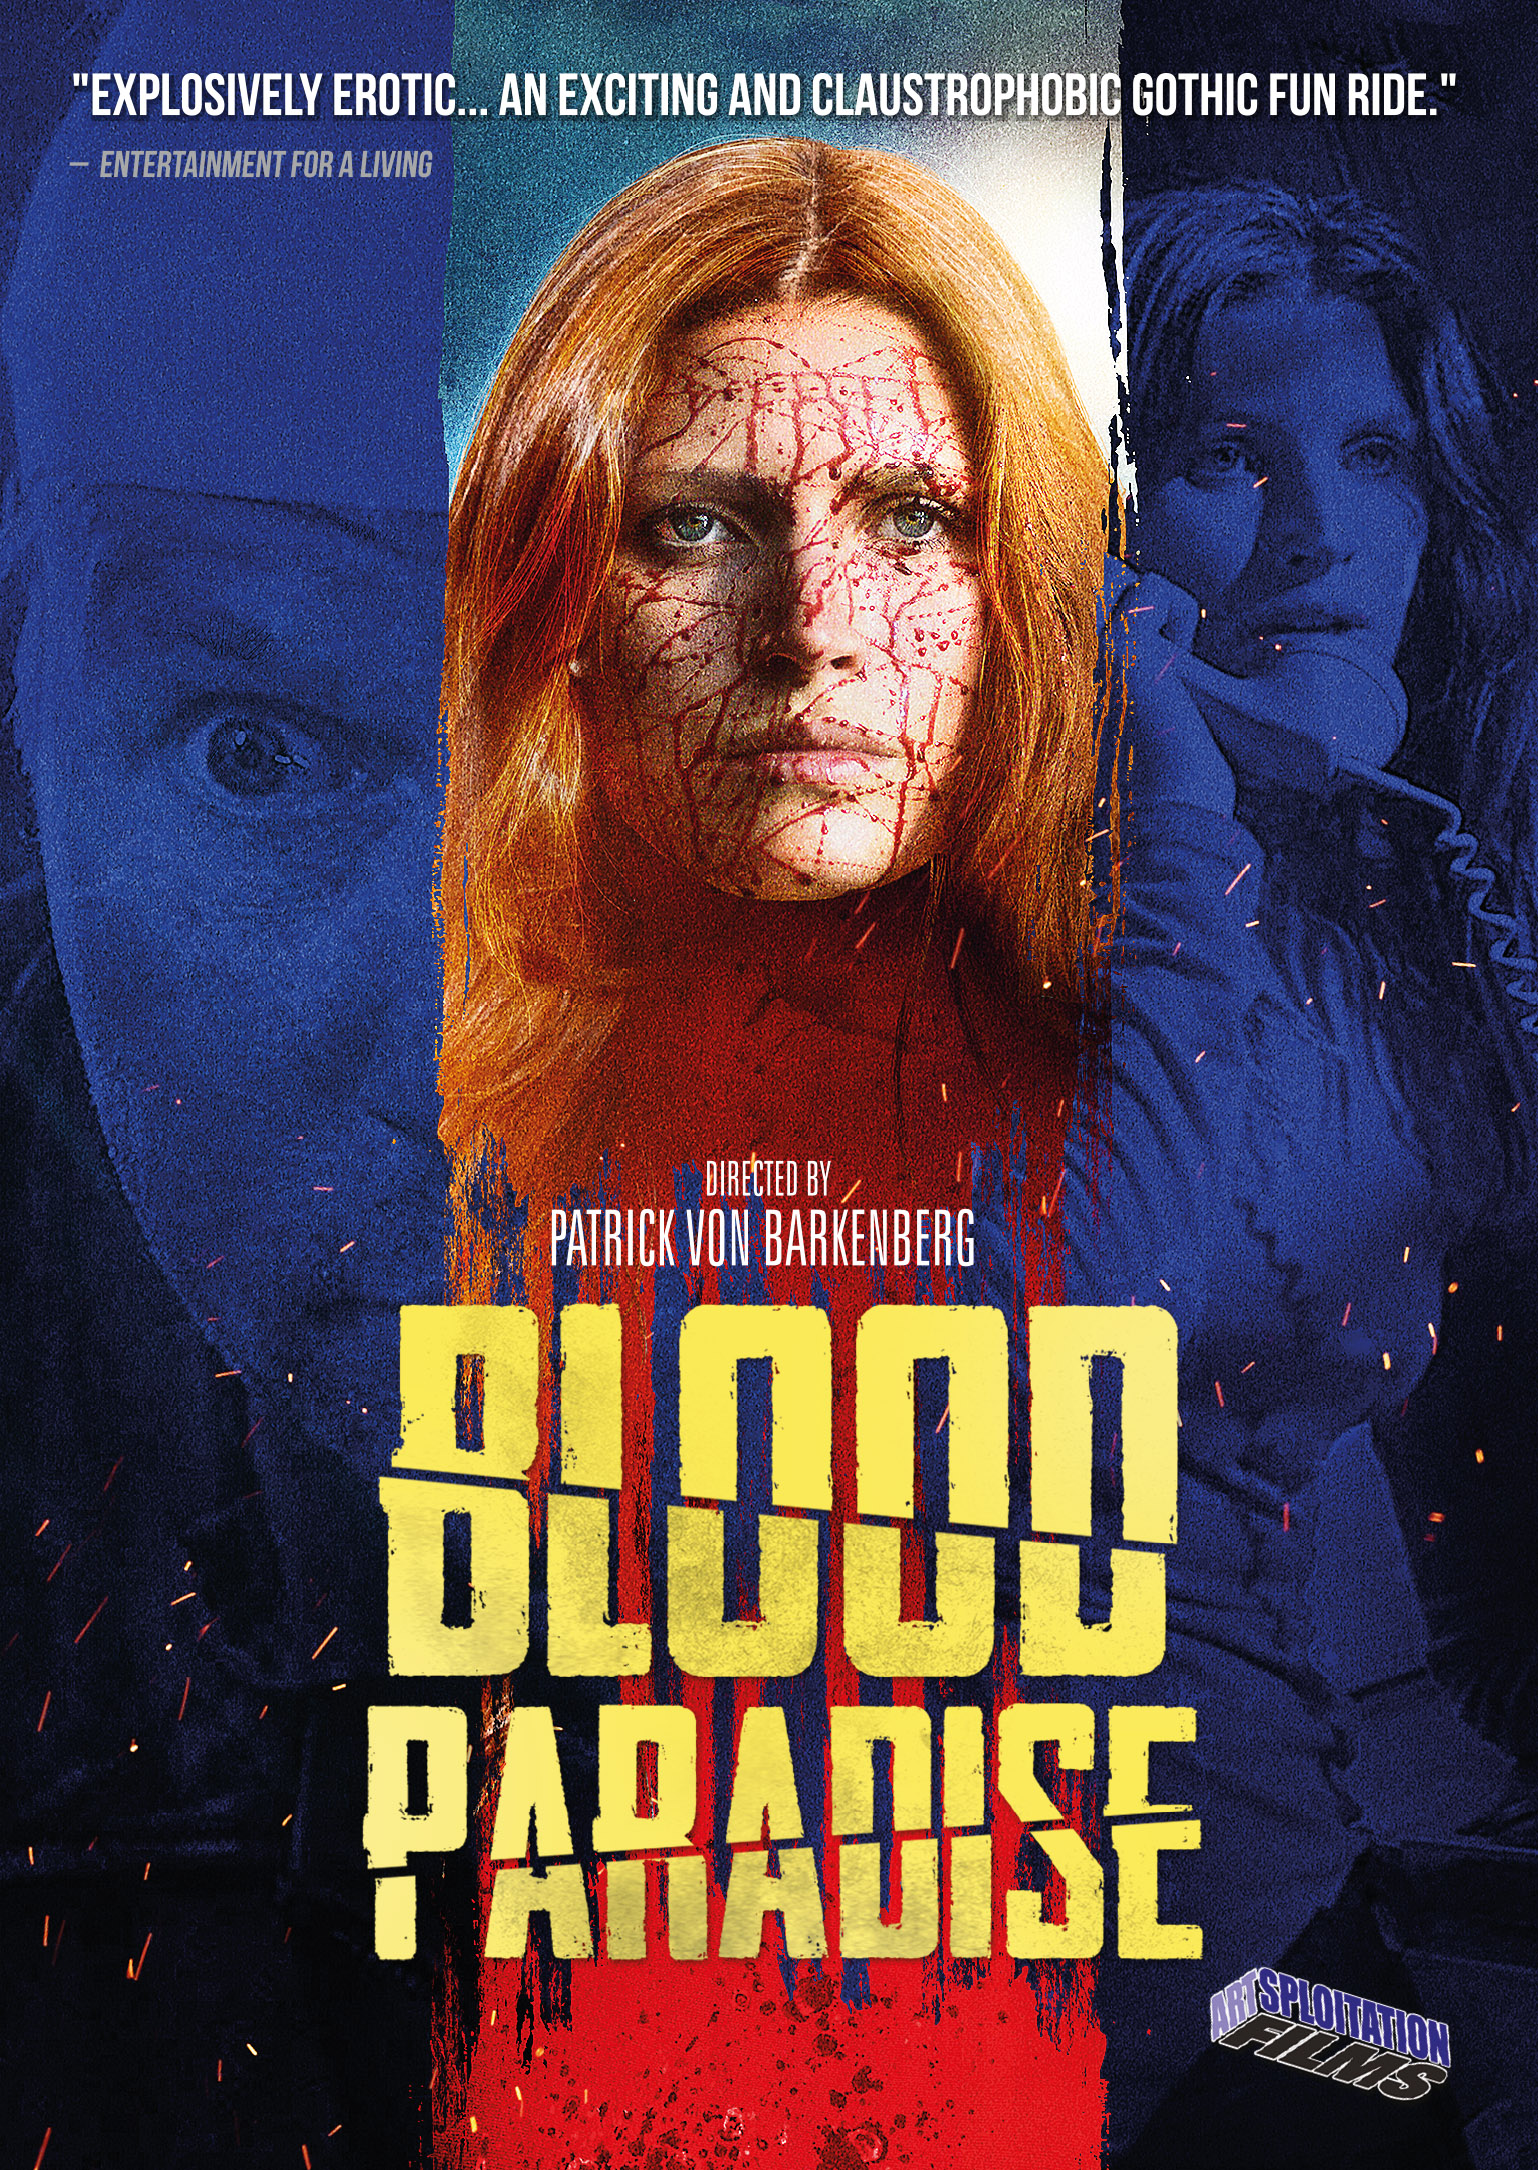 Nonton film Blood Paradise layarkaca21 indoxx1 ganool online streaming terbaru